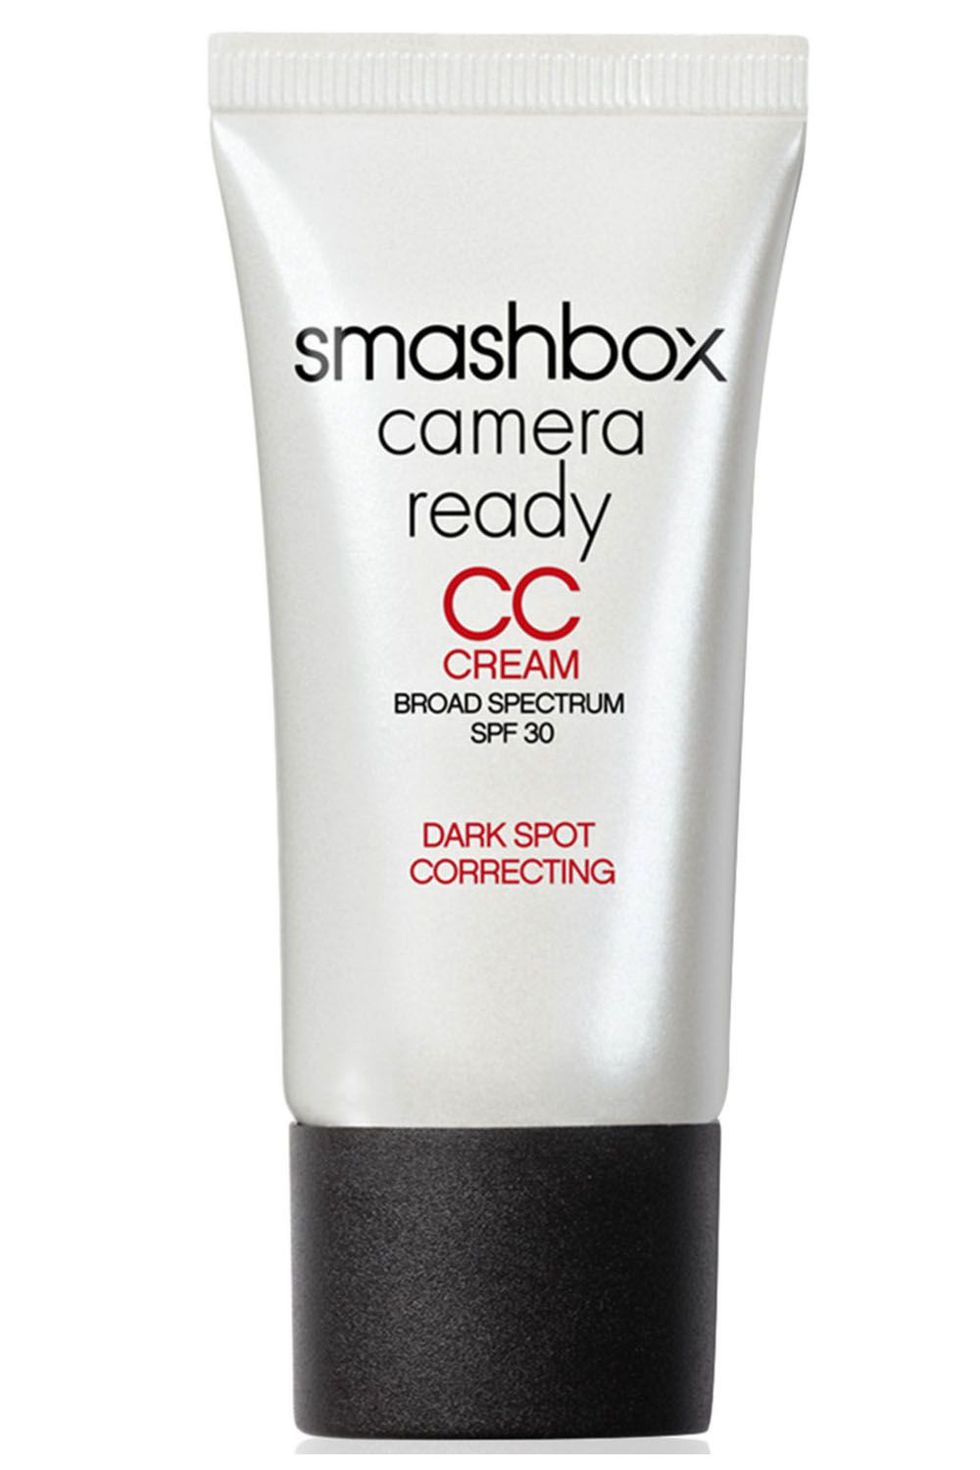 Smashbox Camera Ready CC Cream SPF 30